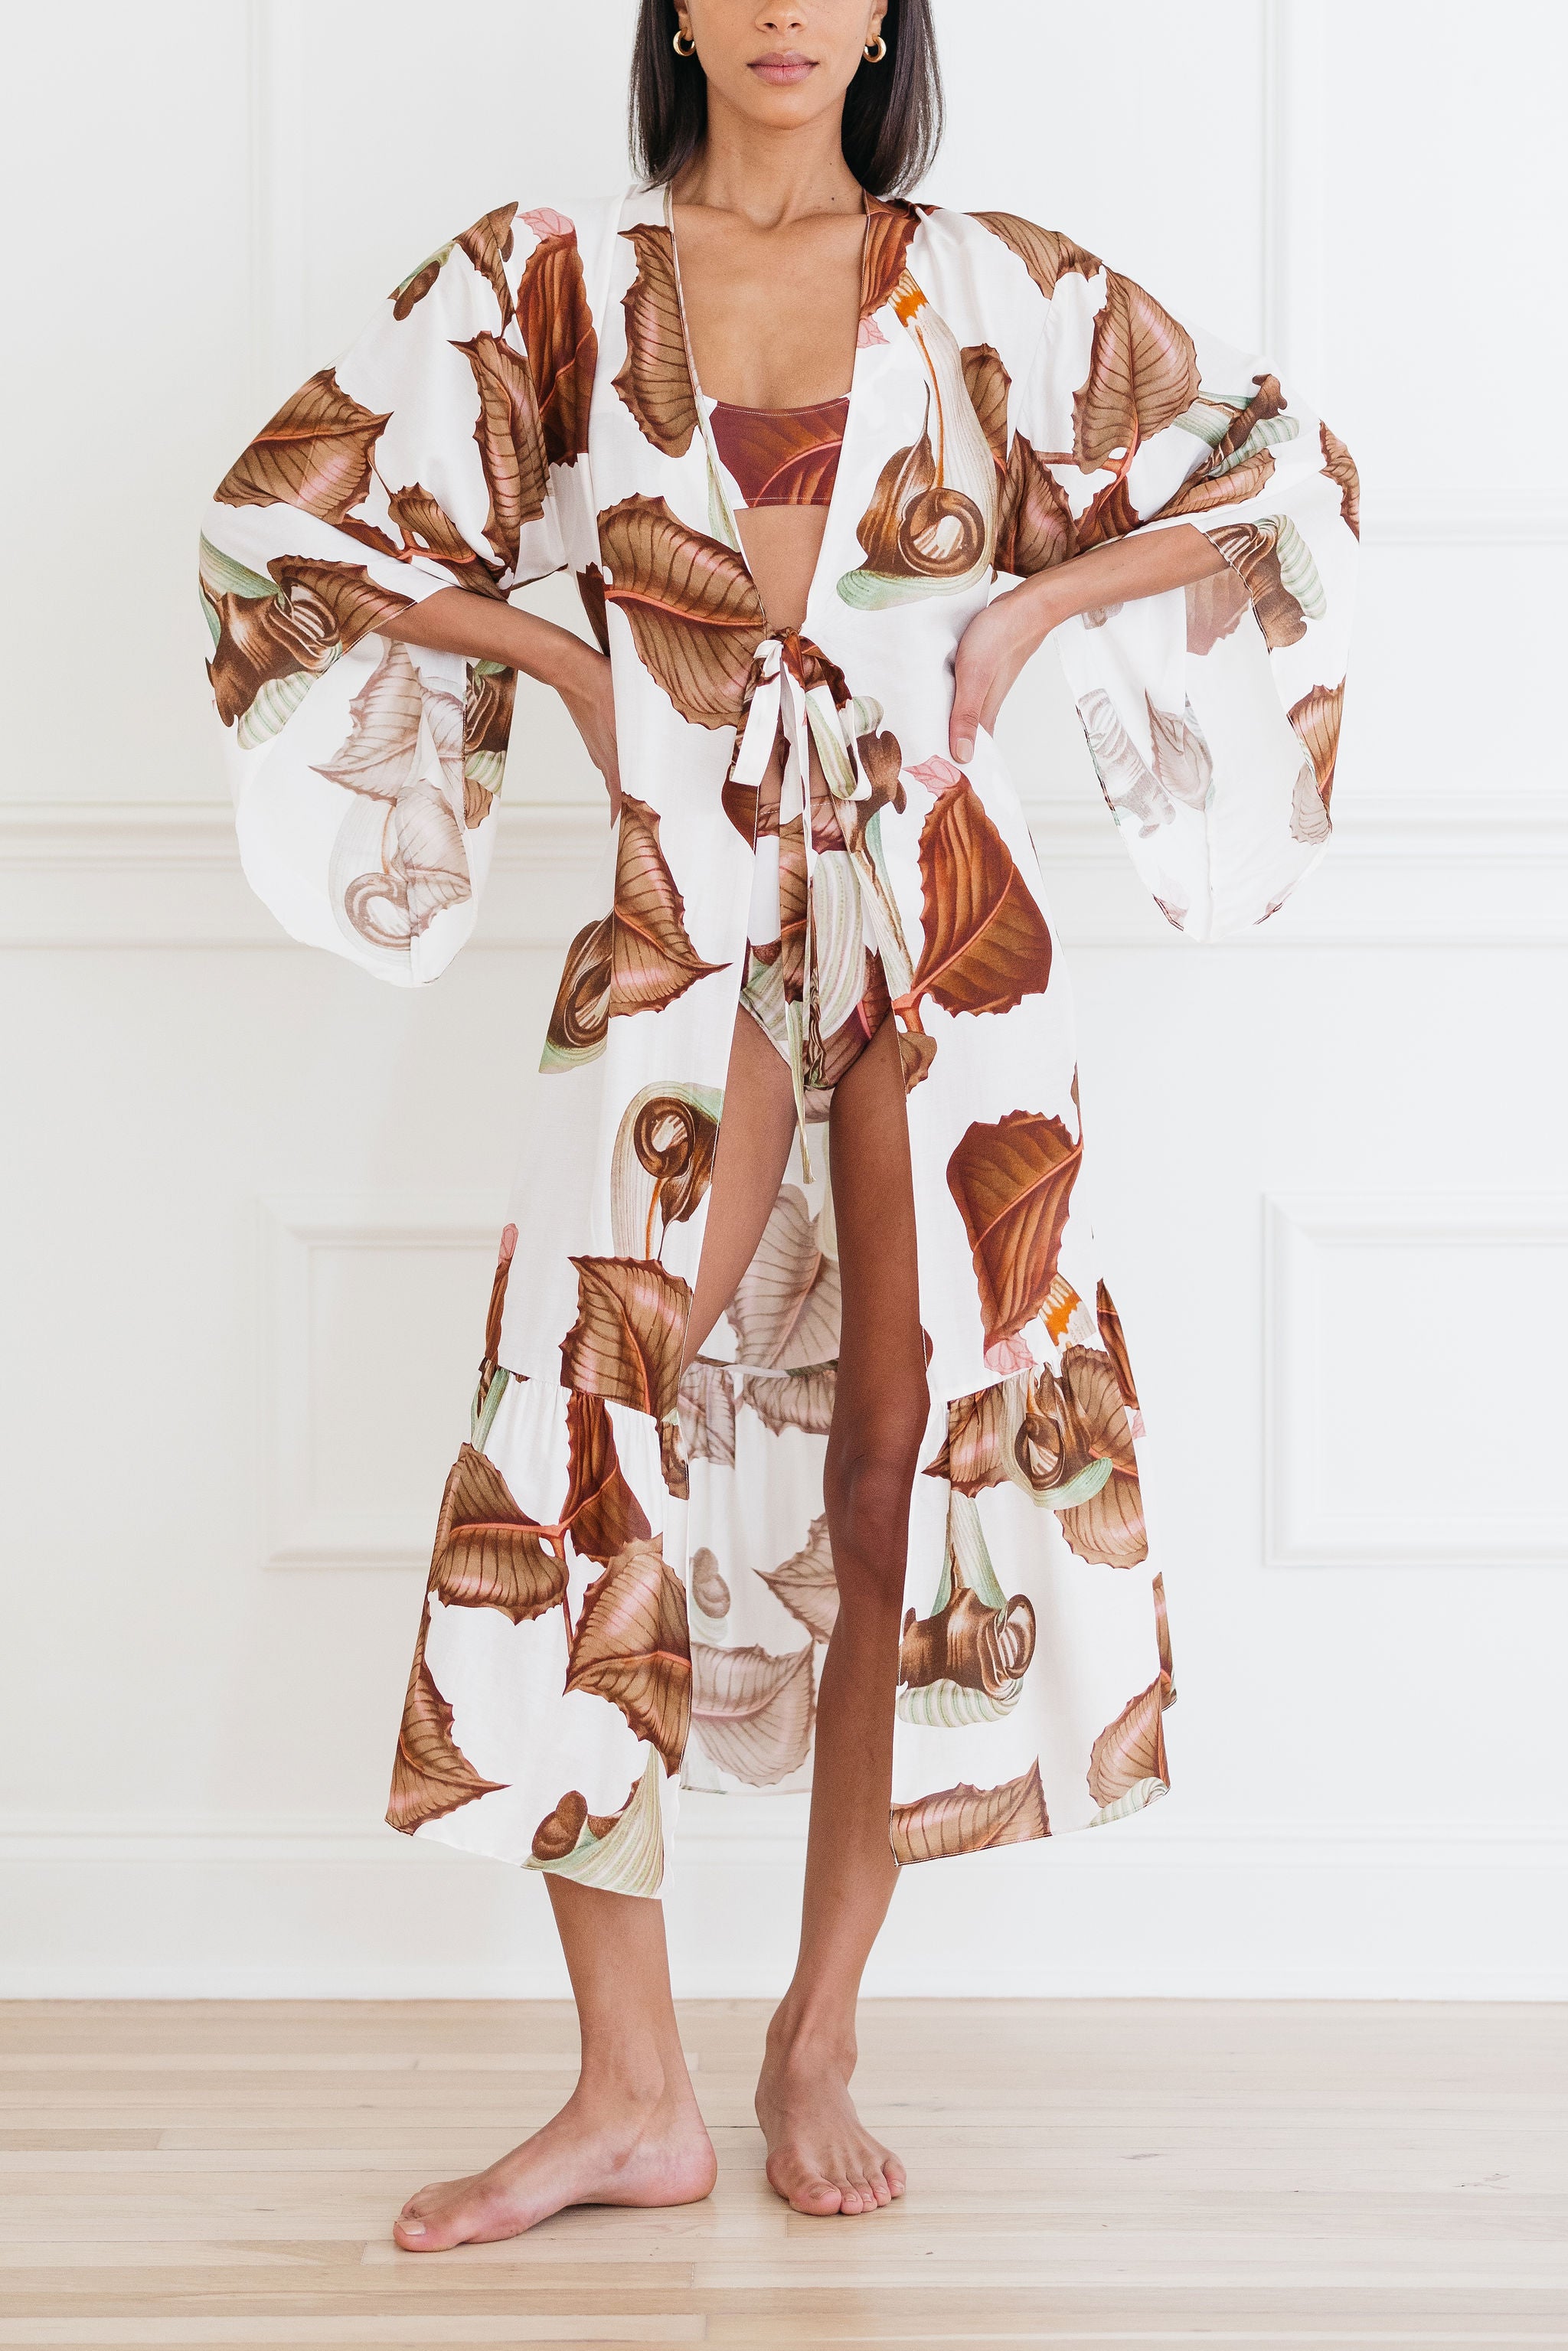 Espace Rania Angel - Ariana - #Rania haute couture#❤❤❤ #Robe princesse#  #Collection 2019# #Volumineuse# #avec longue traine# #lumineuse❤❤❤